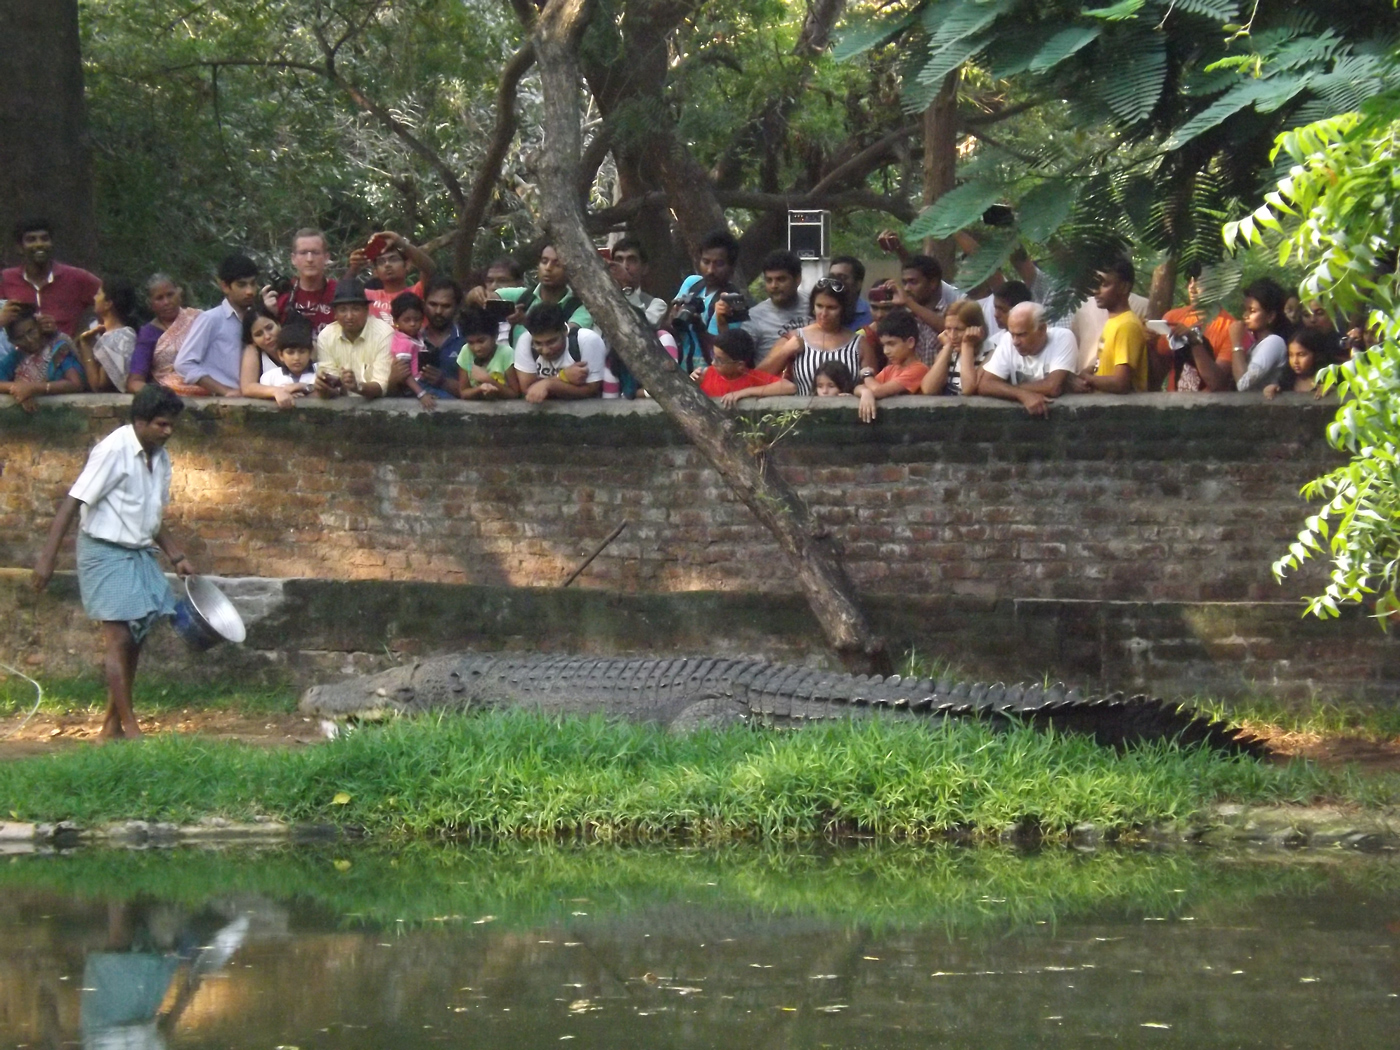 Madras Crocodile Bank Trust & Centre for Herpetology